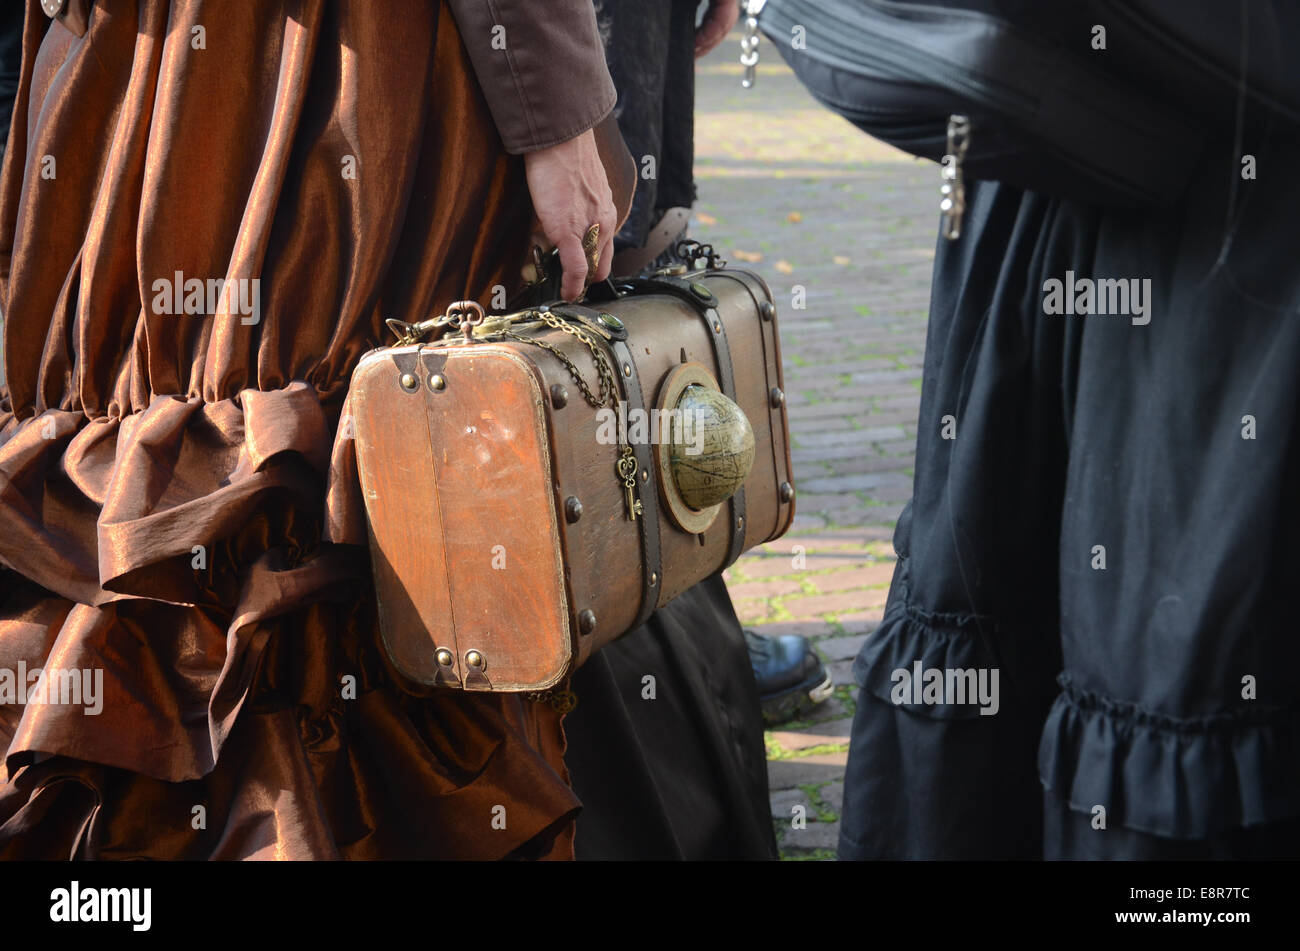 steampunk suitcase at 2014 Fantasy Fair Arcen Netherlands Stock Photo